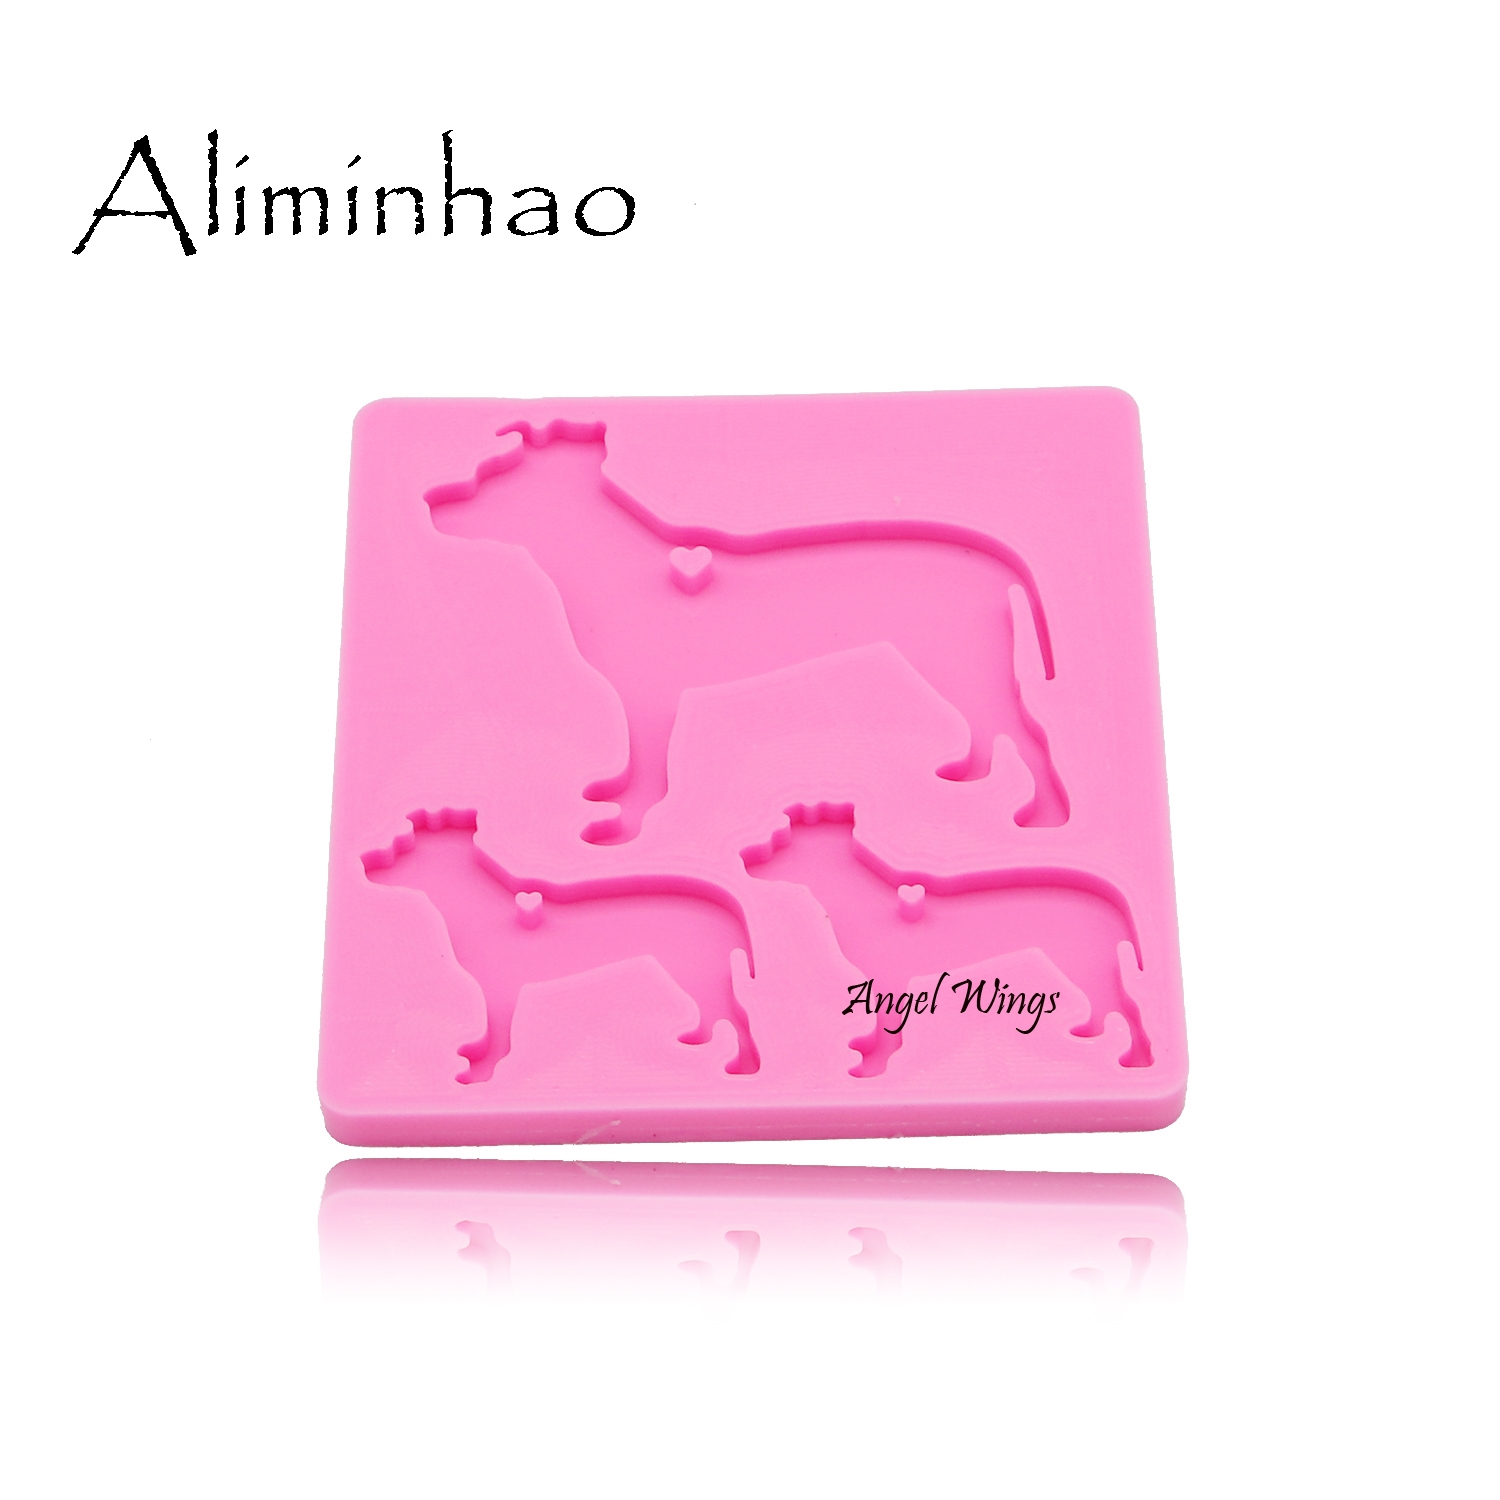 DY0103 Shiny Dog family keychains mold Clay DIY dog Mom/baby Jewelry Making glitter epoxy Key Chain Silicone mold